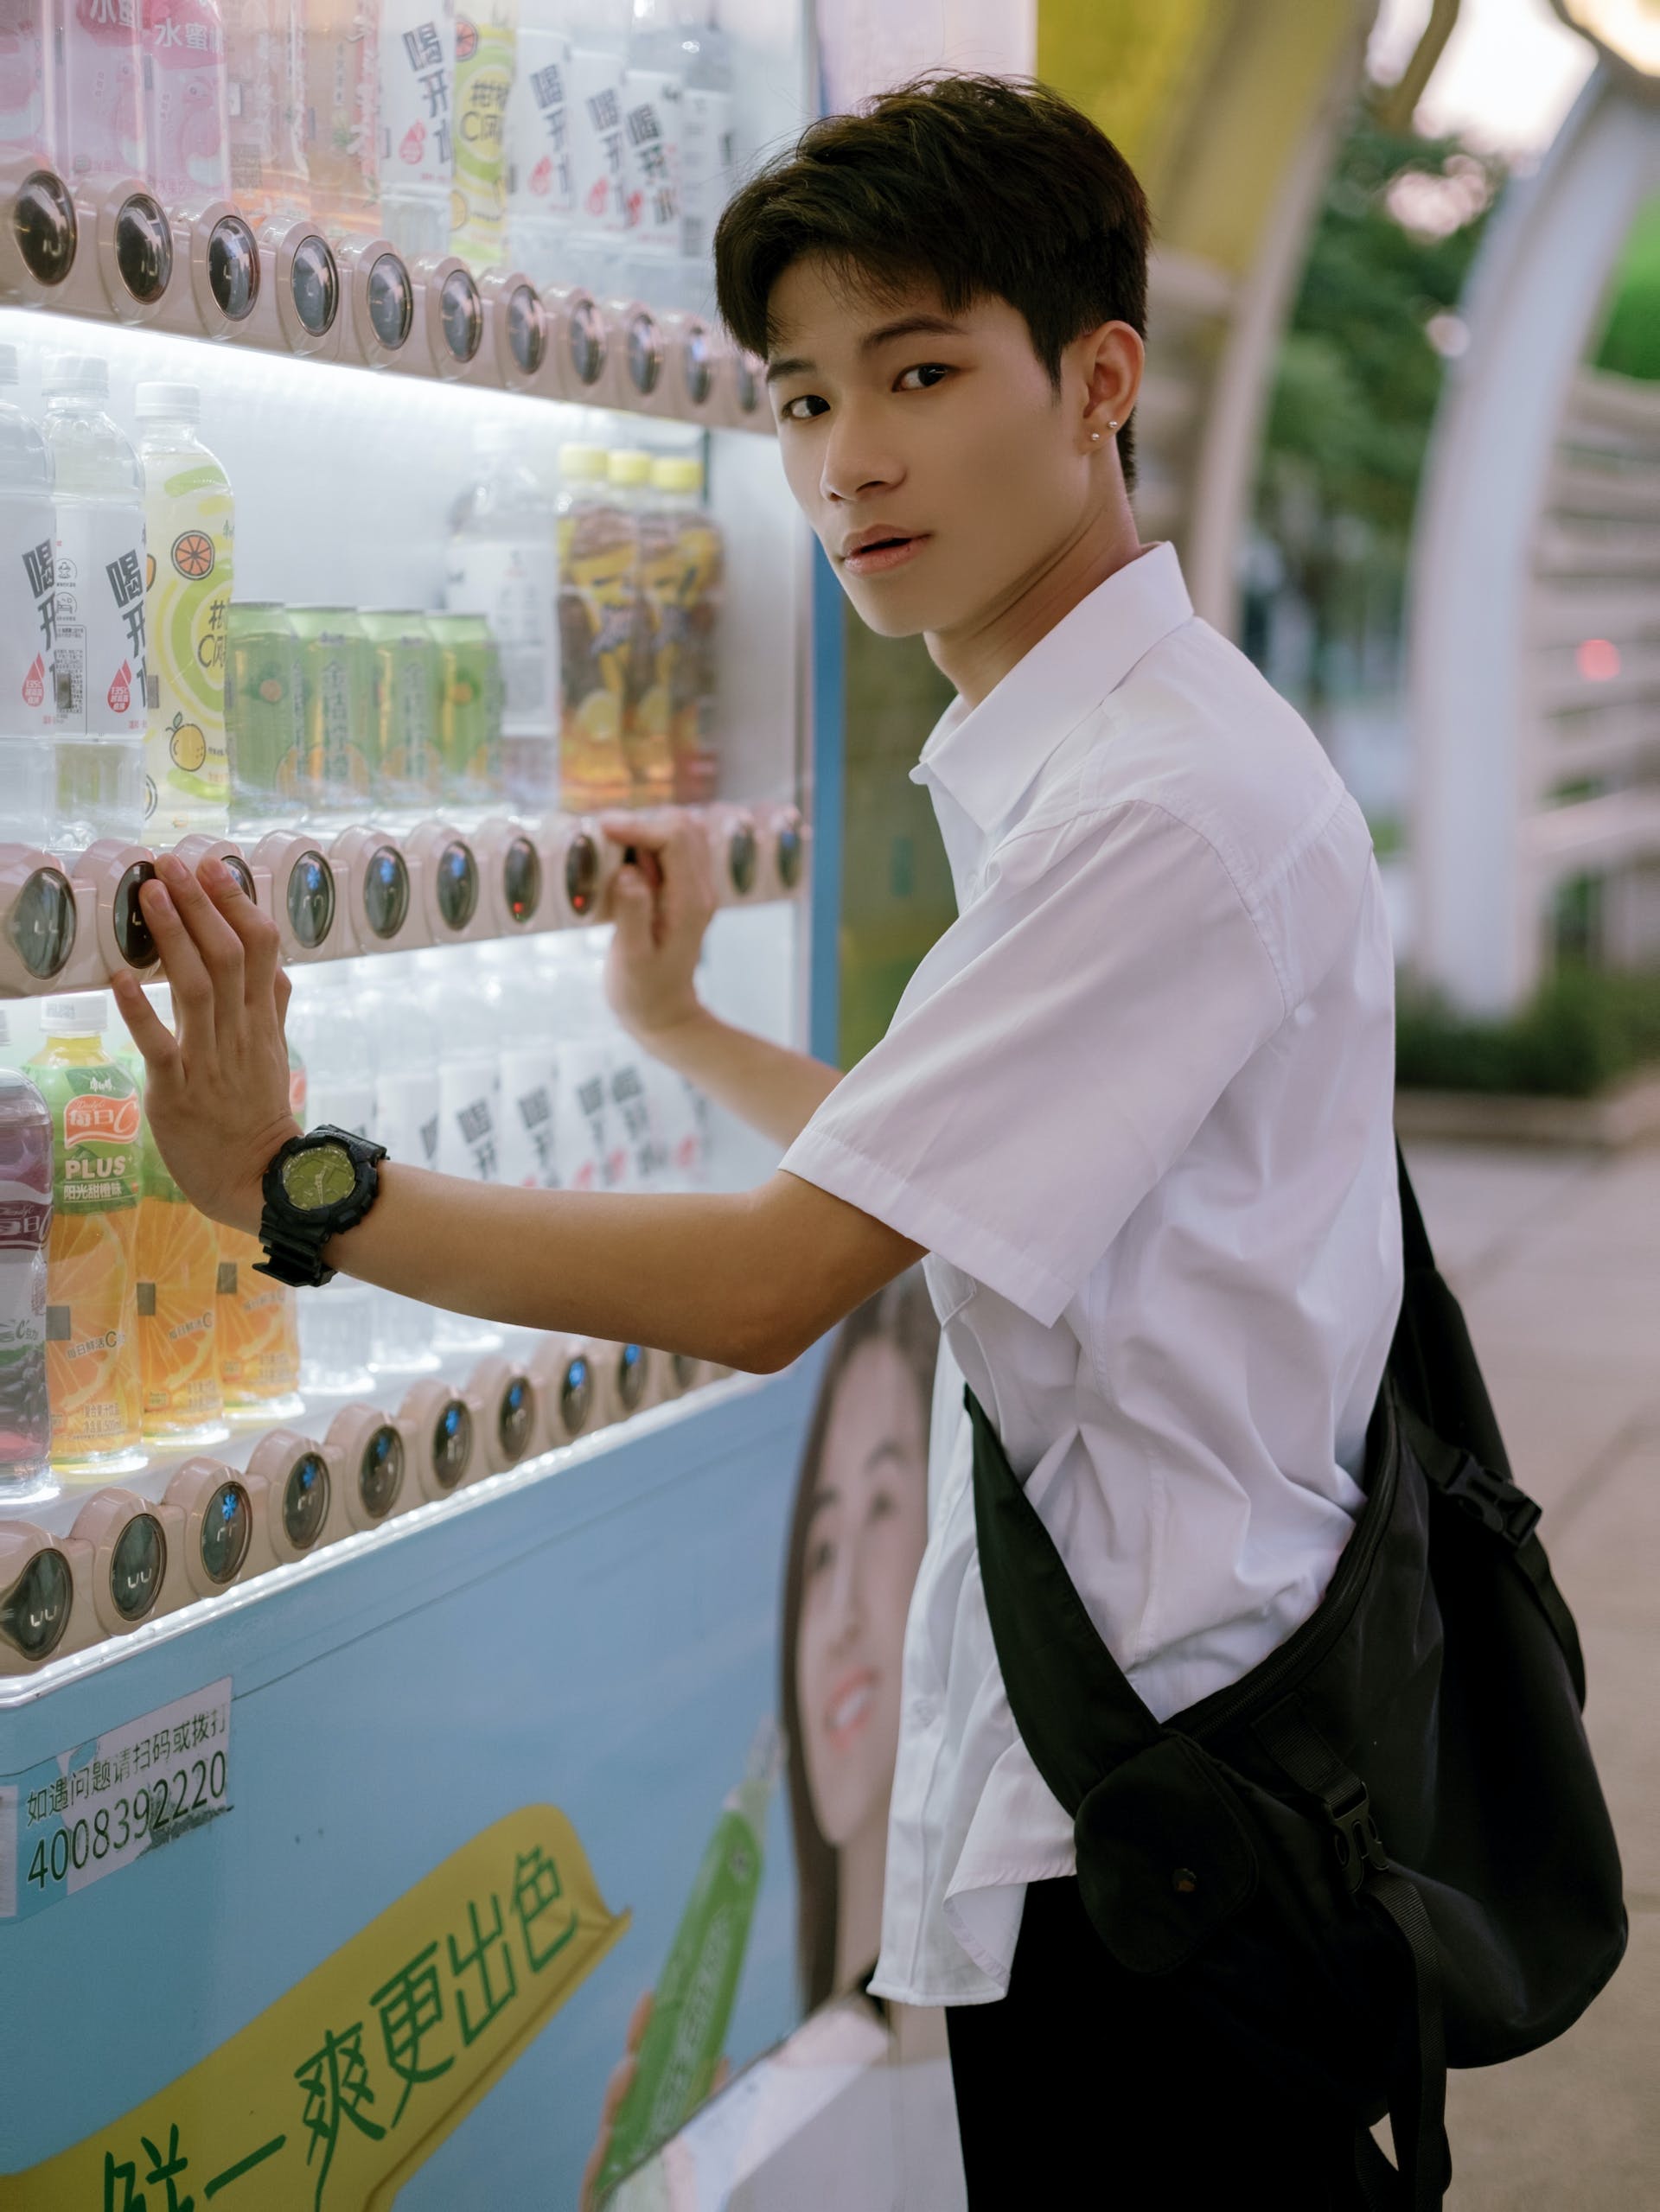 A boy standing next to a vending machine | Source: Pexels